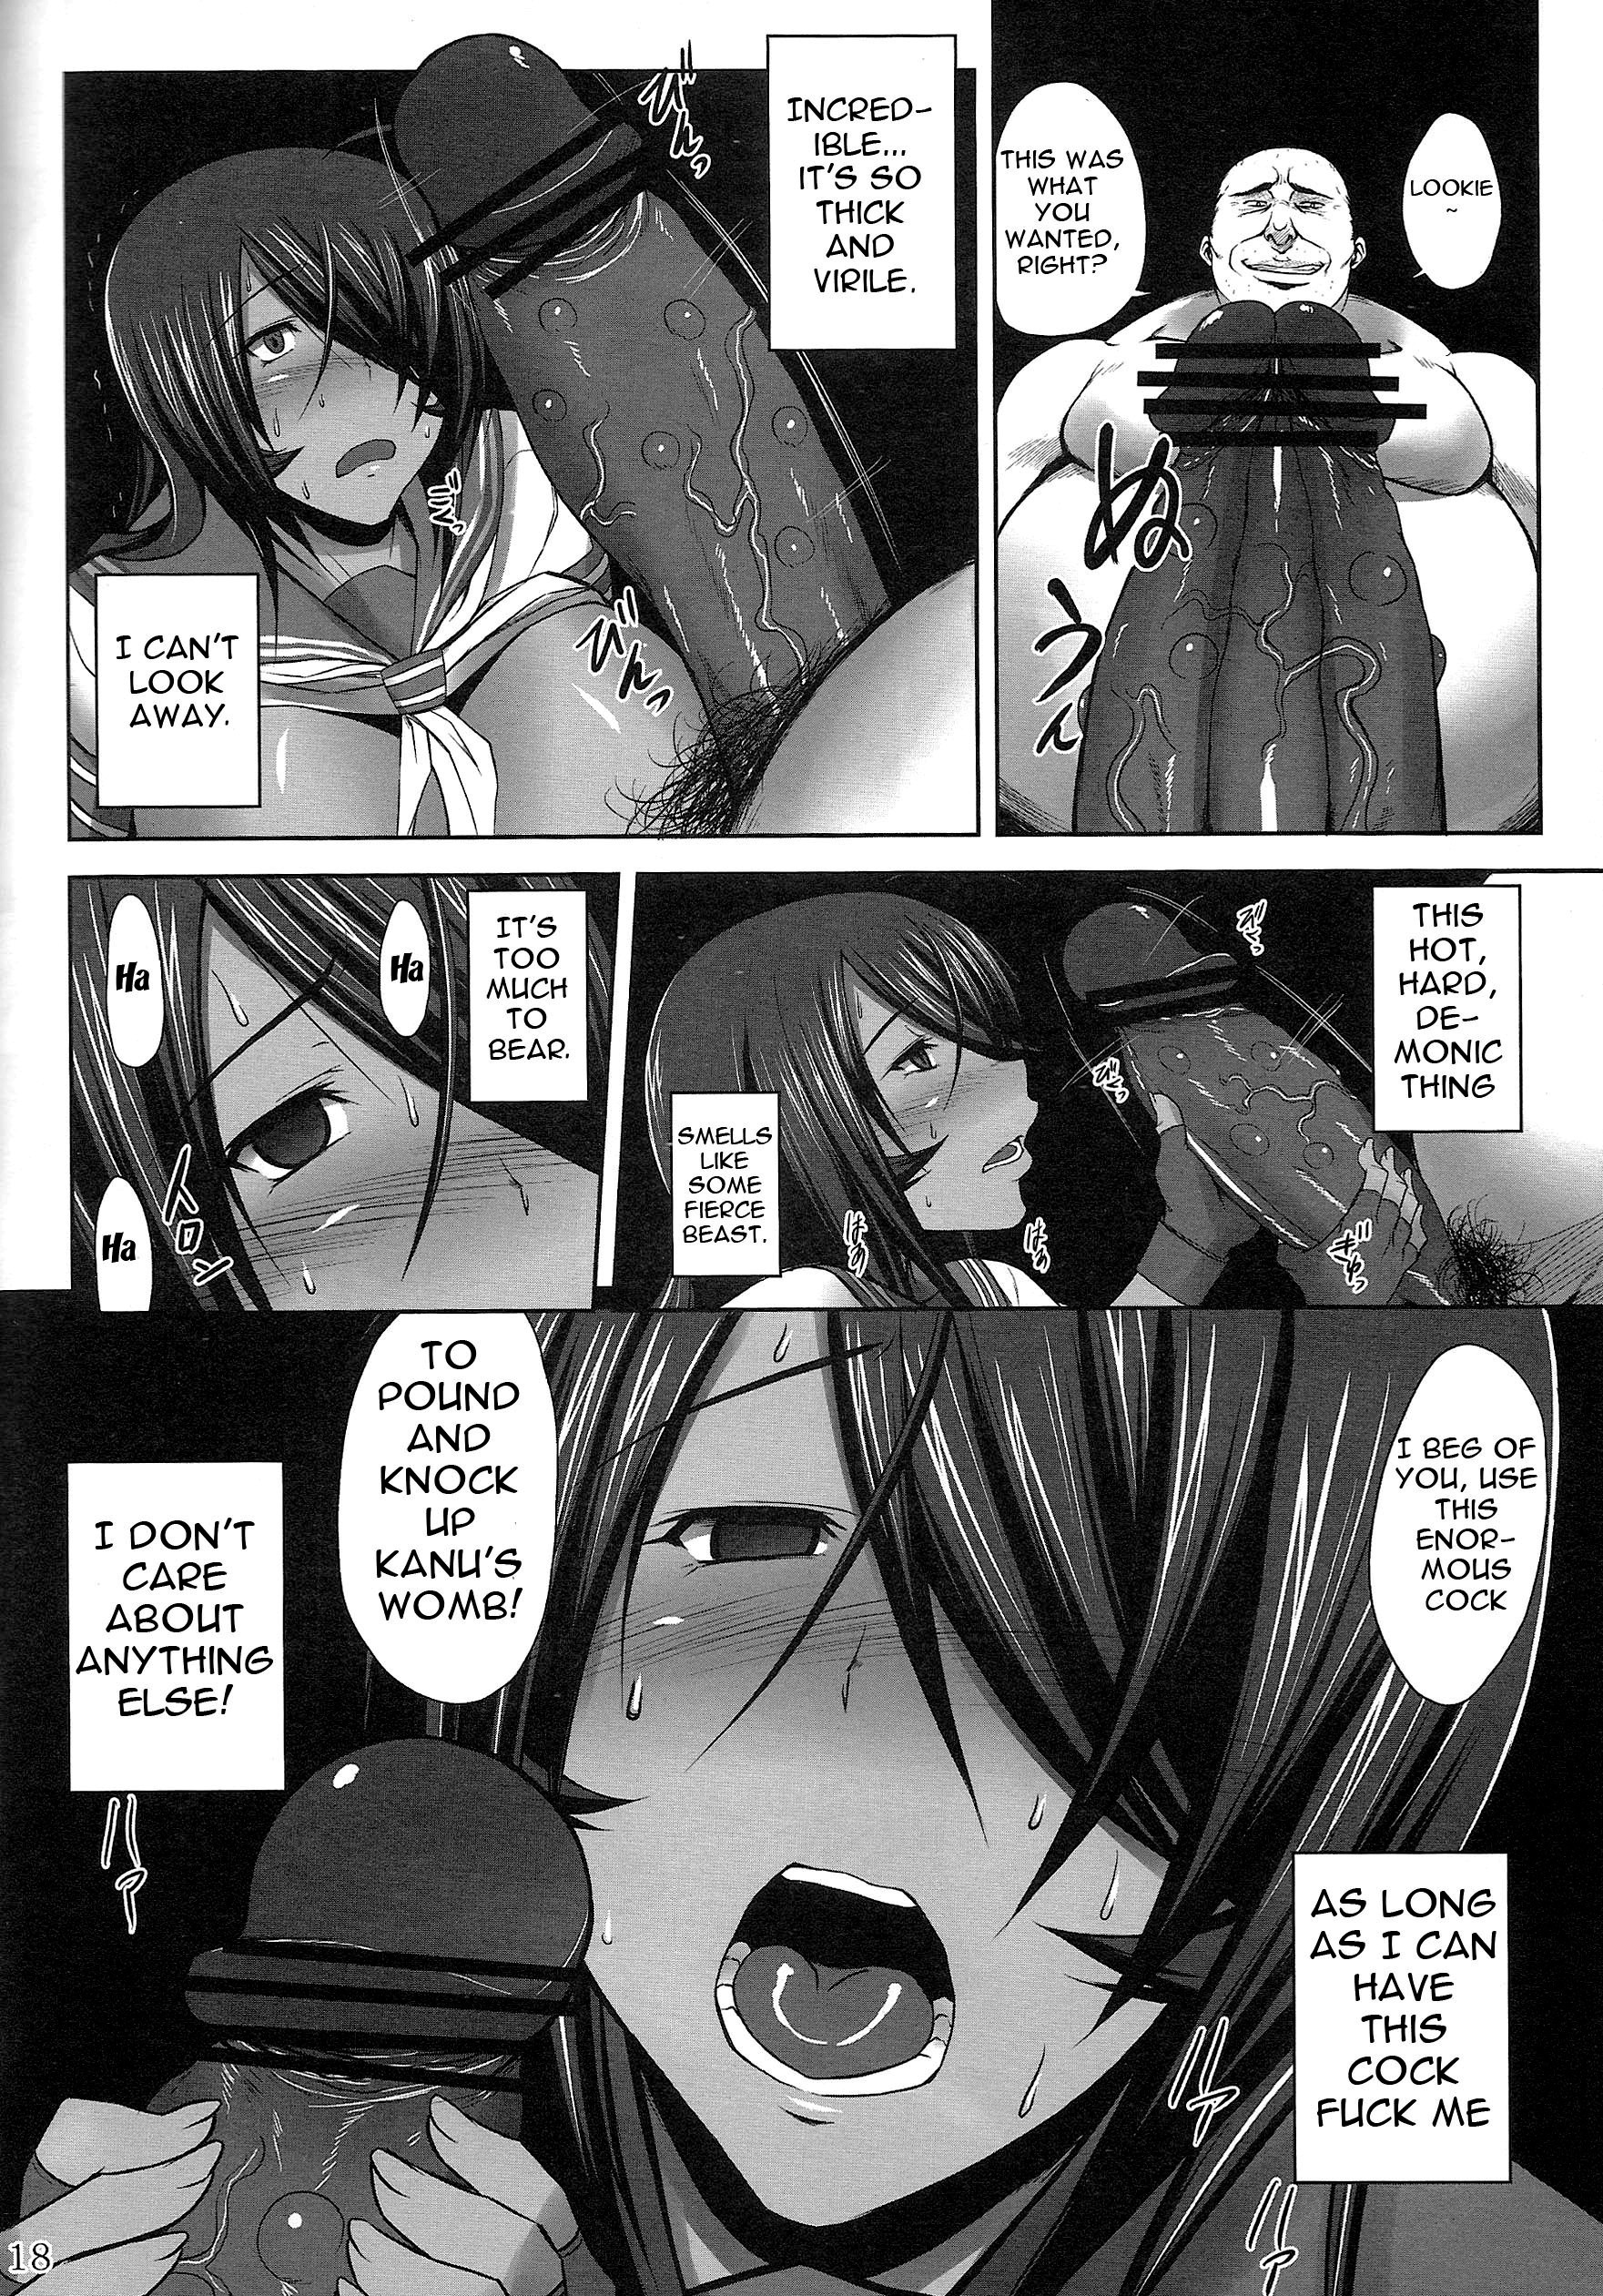 Kanu Violation 2 hentai manga picture 15